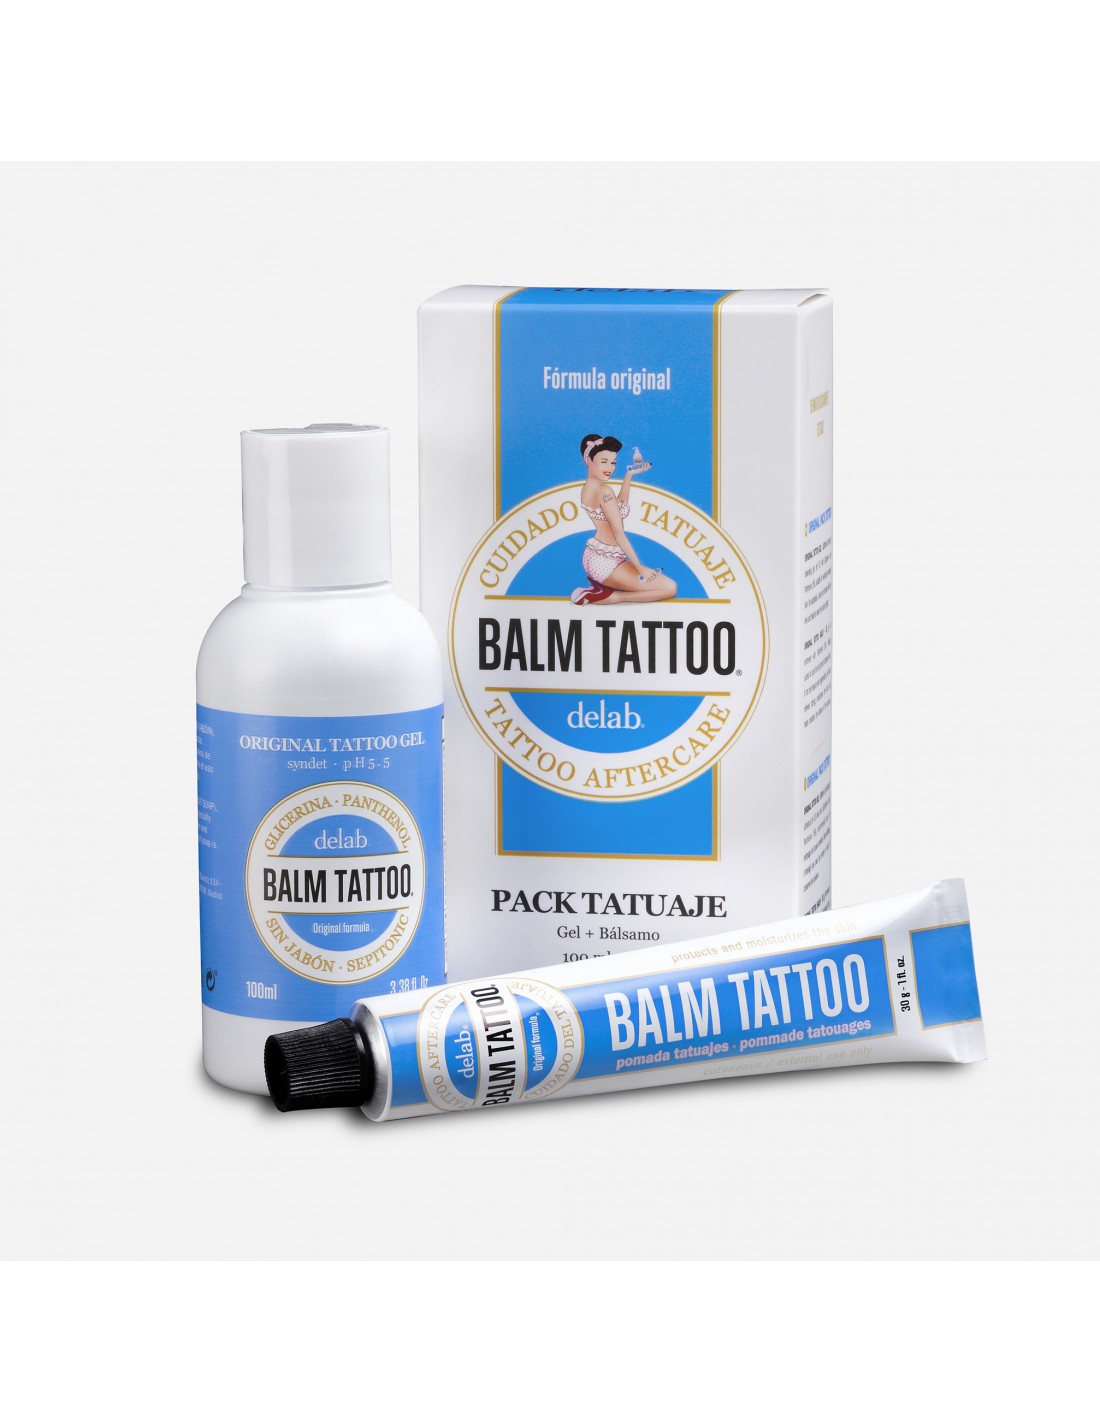 Balm tattoo cream